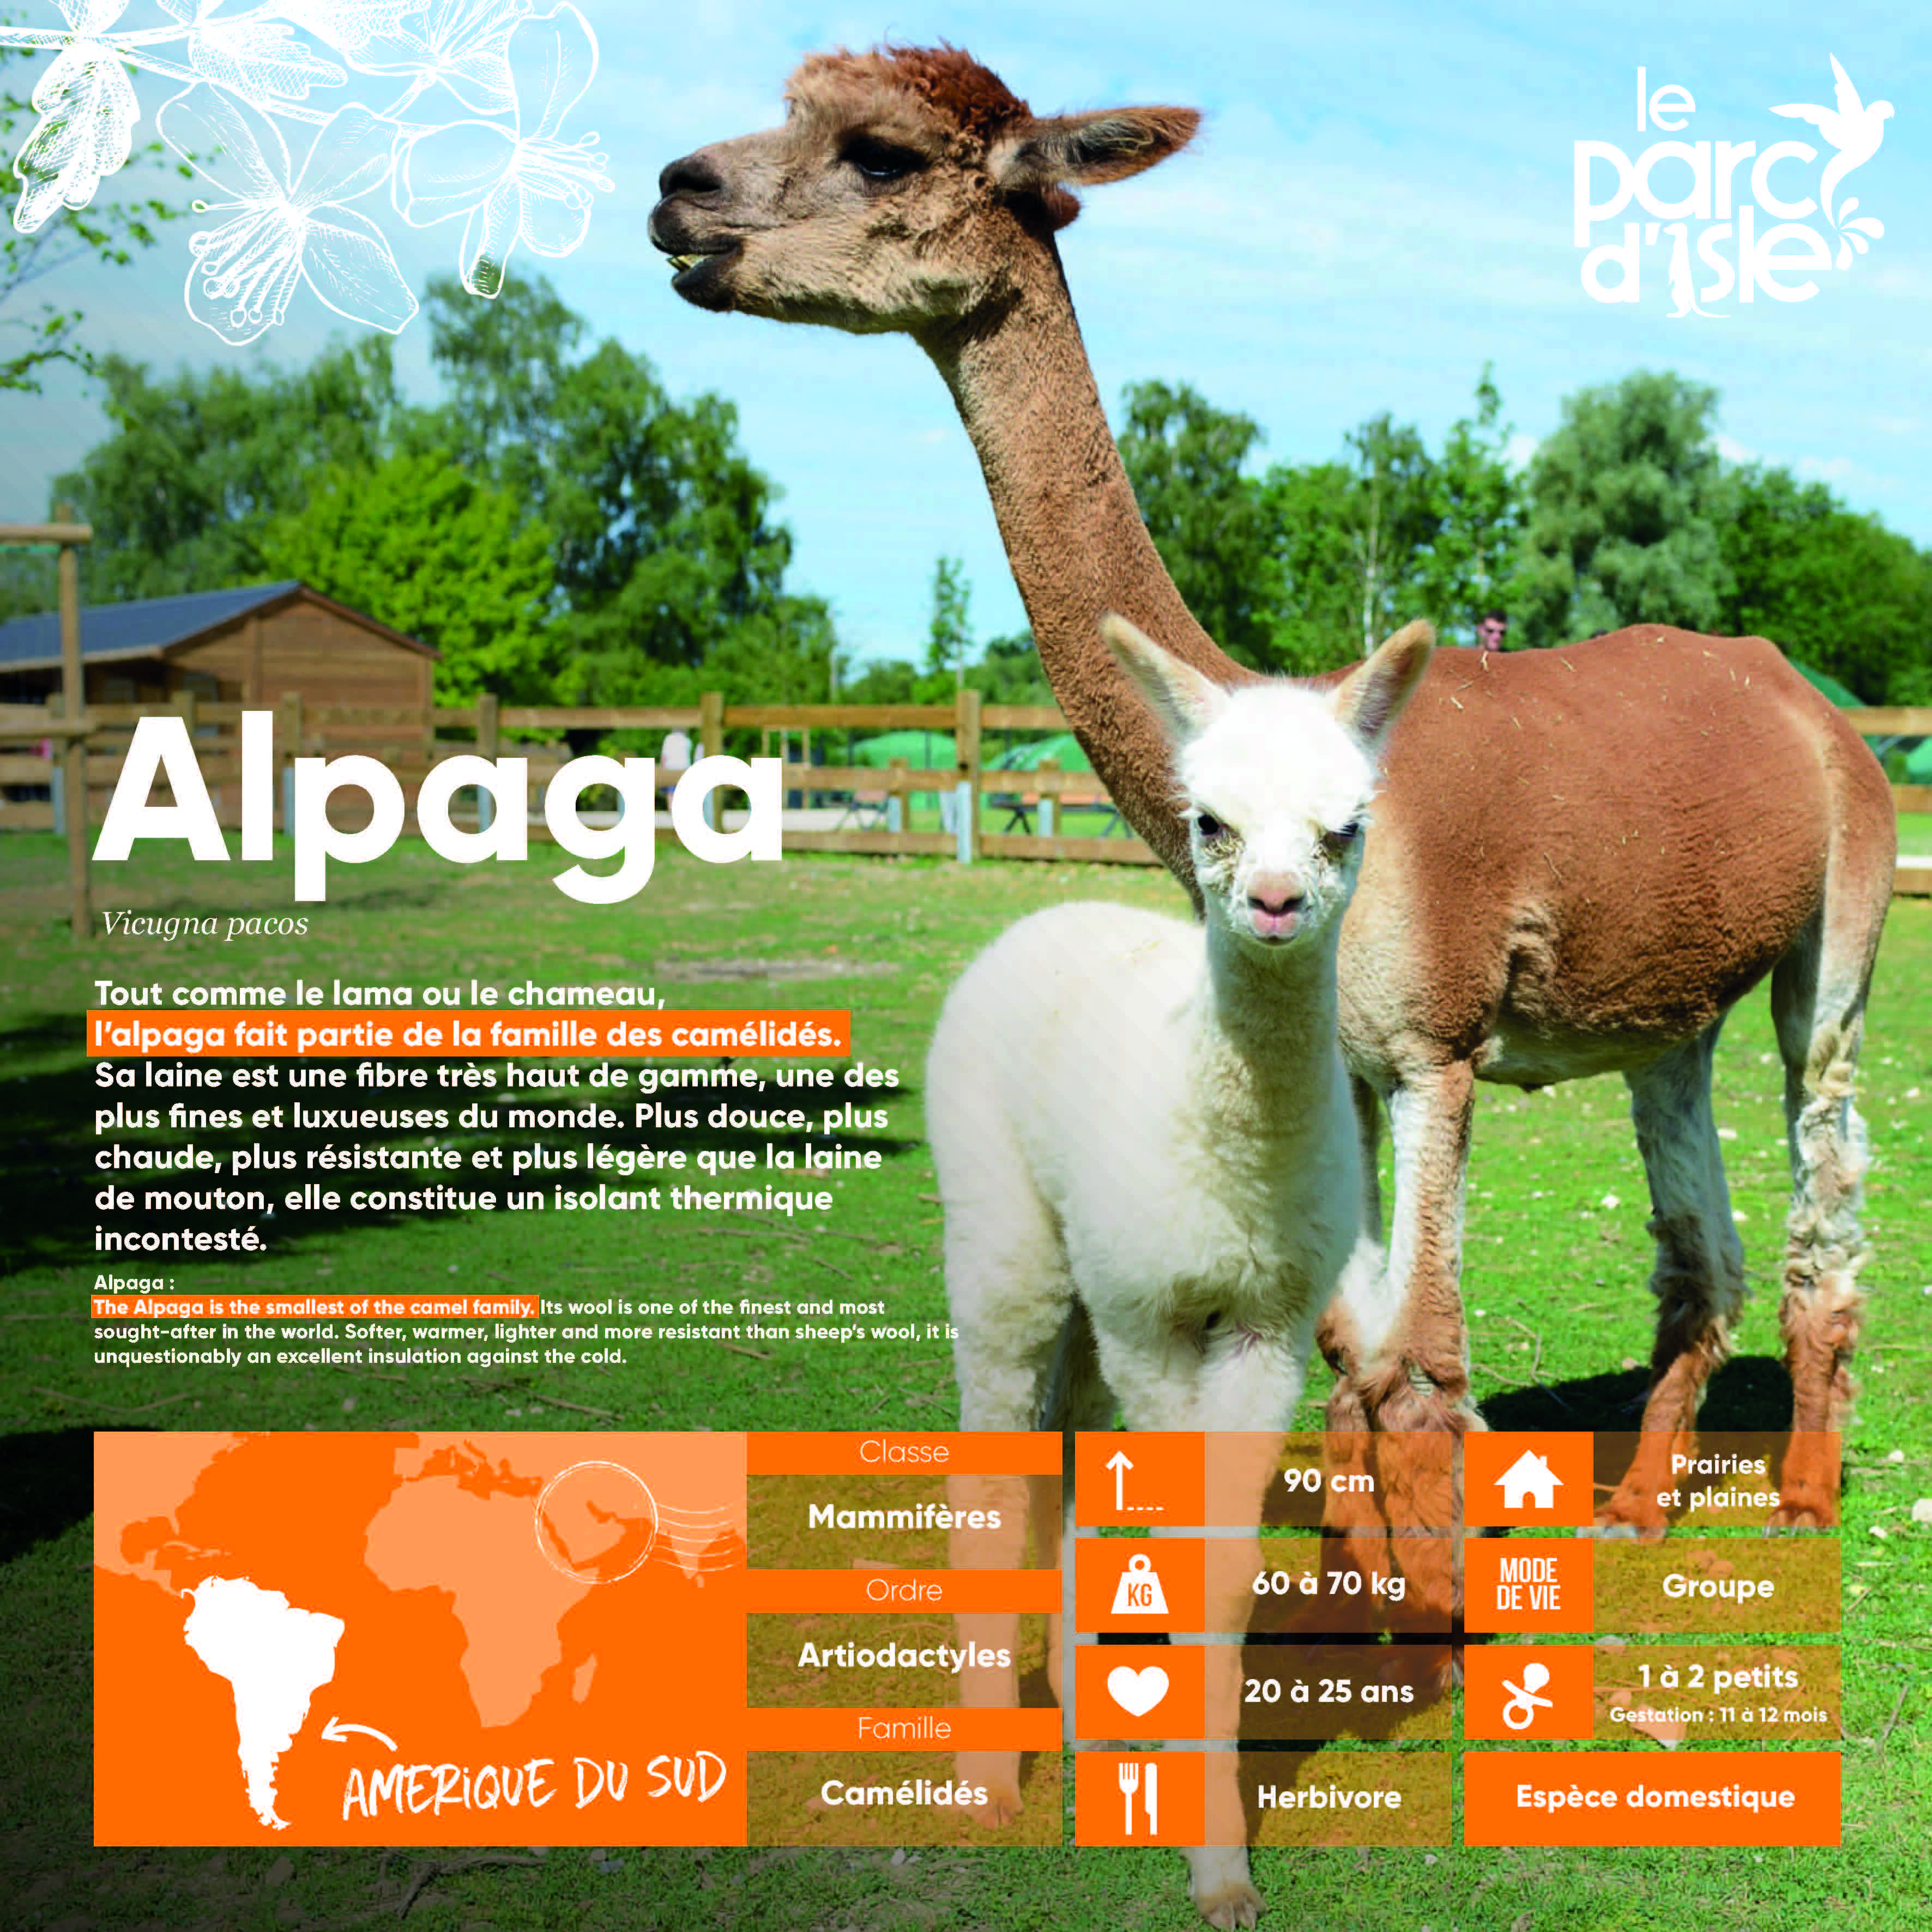 Alpaga - Agrandir l'image, .JPG 1,01Mo (fenêtre modale)